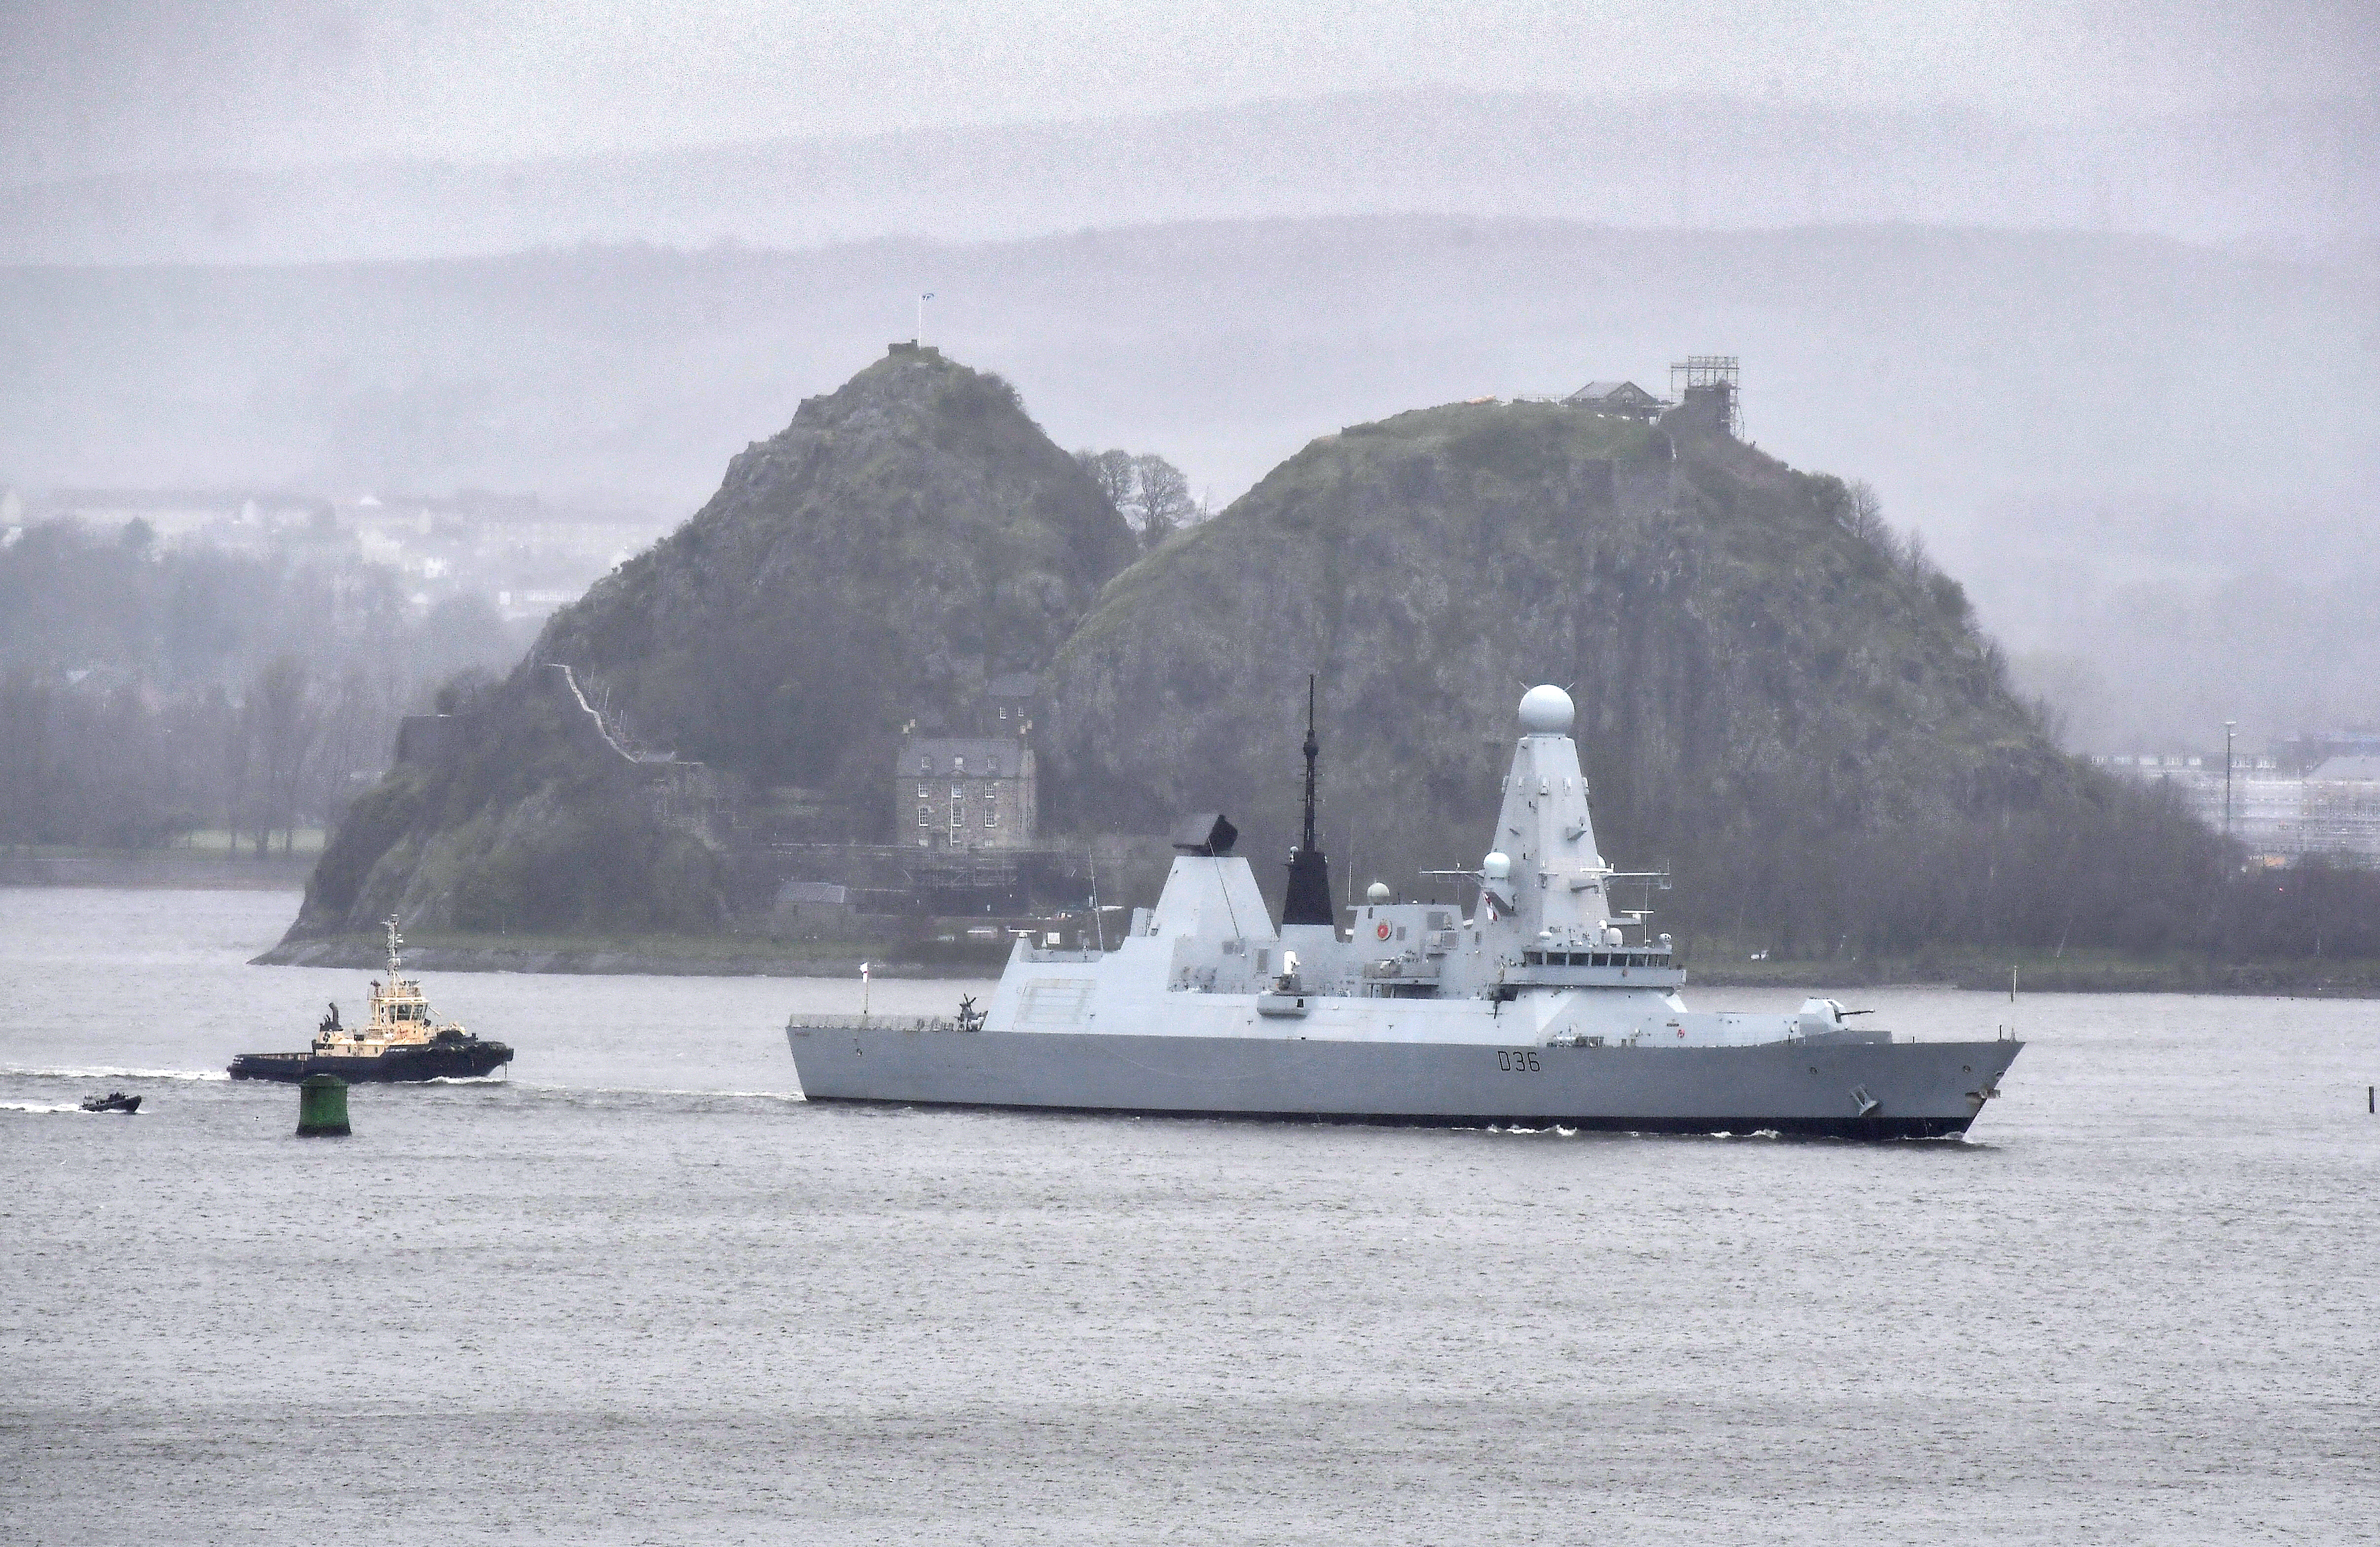 HMS Defender escorted by tugs past Dumbarton Rock